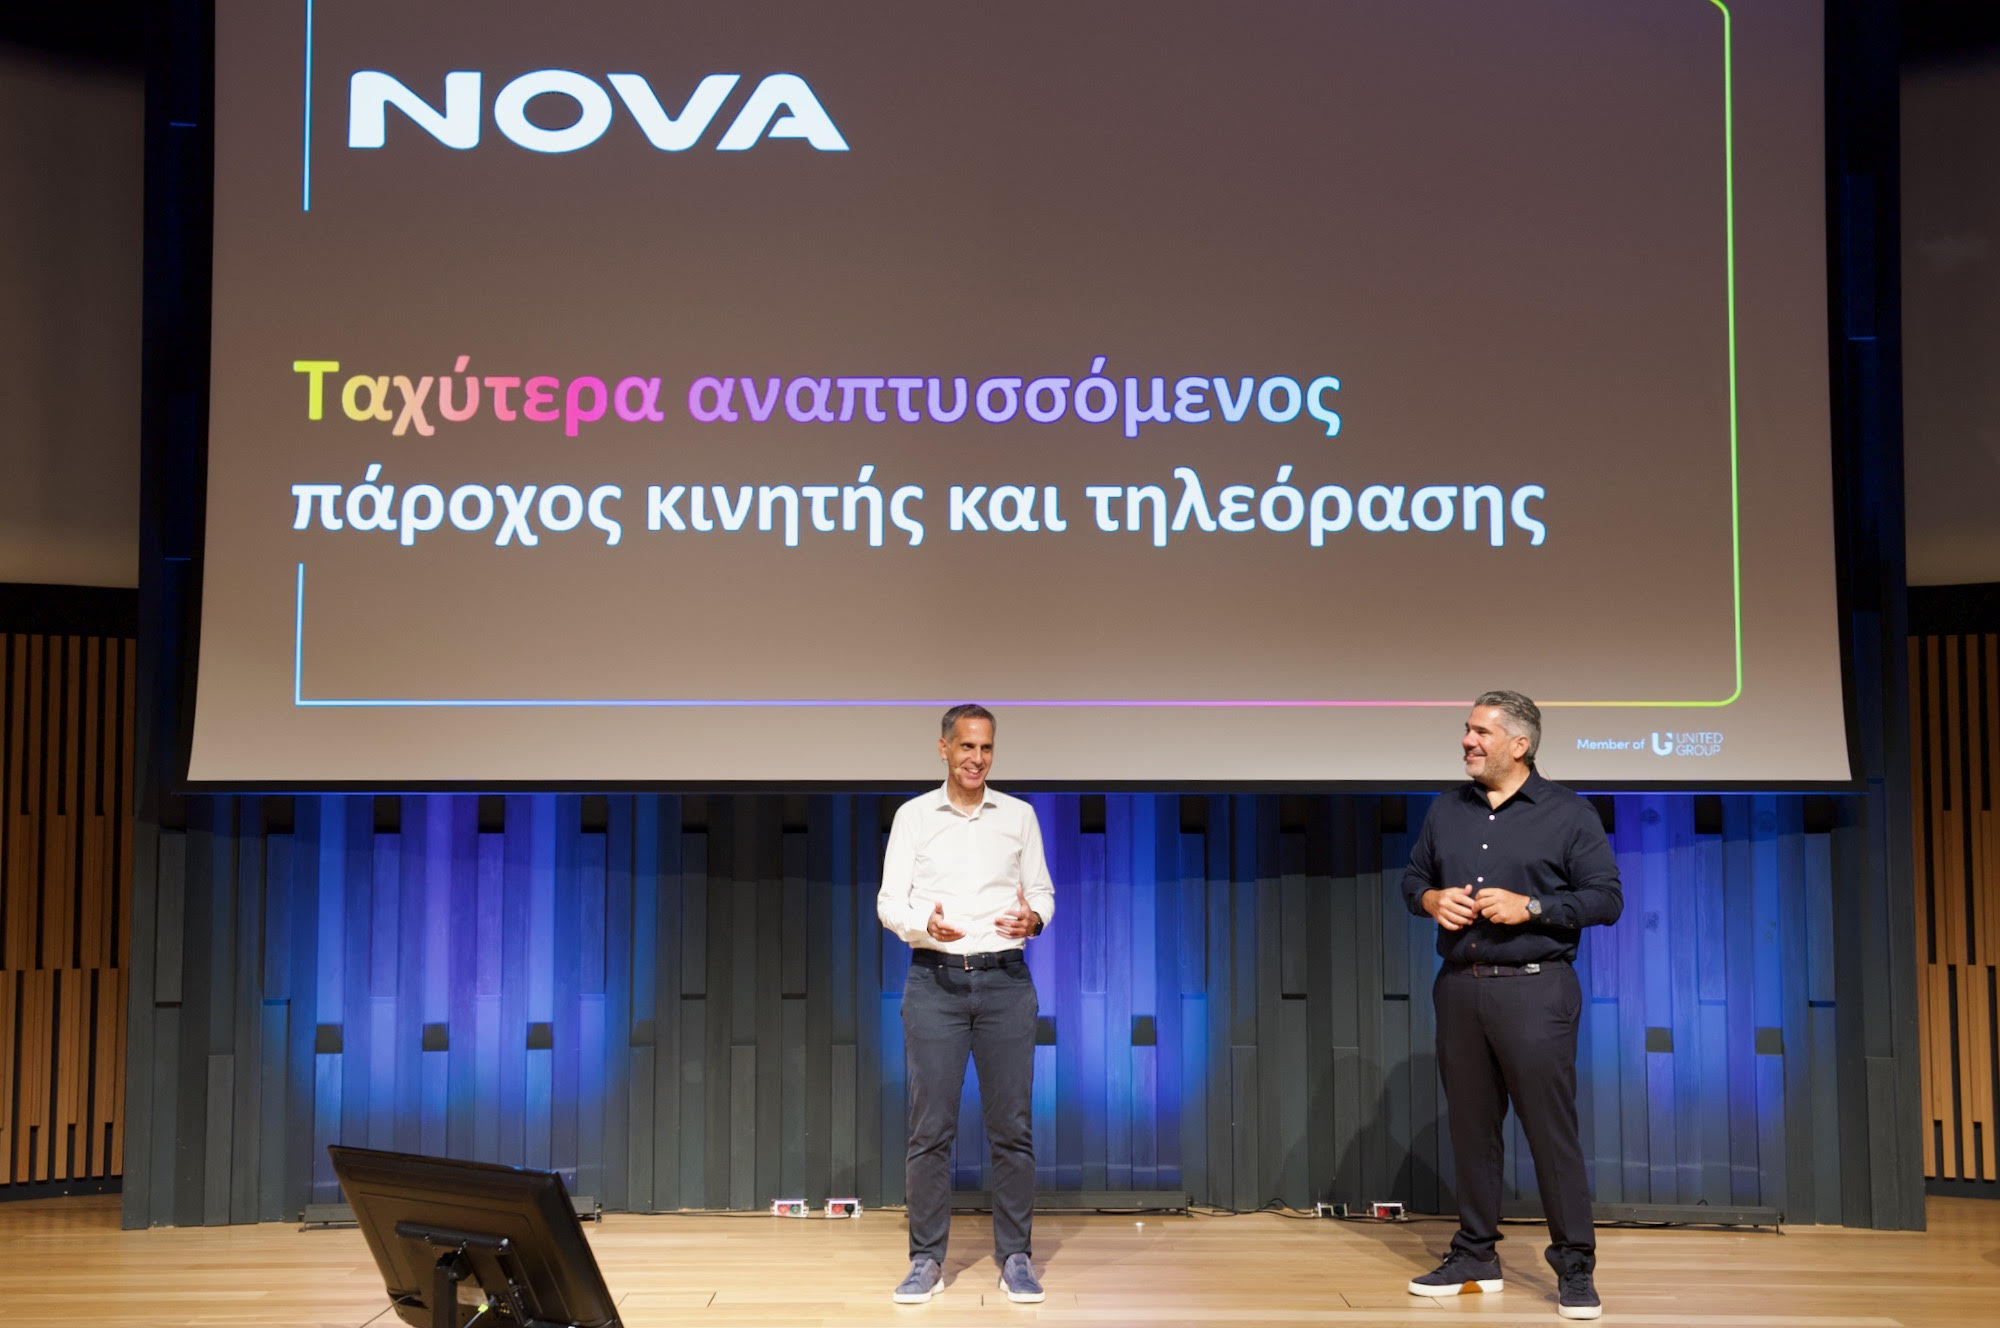 Nova: Το επενδυτικό πλάνο των 2 δισ. ευρώ και το λανσάρισμα νέου 5G κινητού – Δηλώσεις του CEO